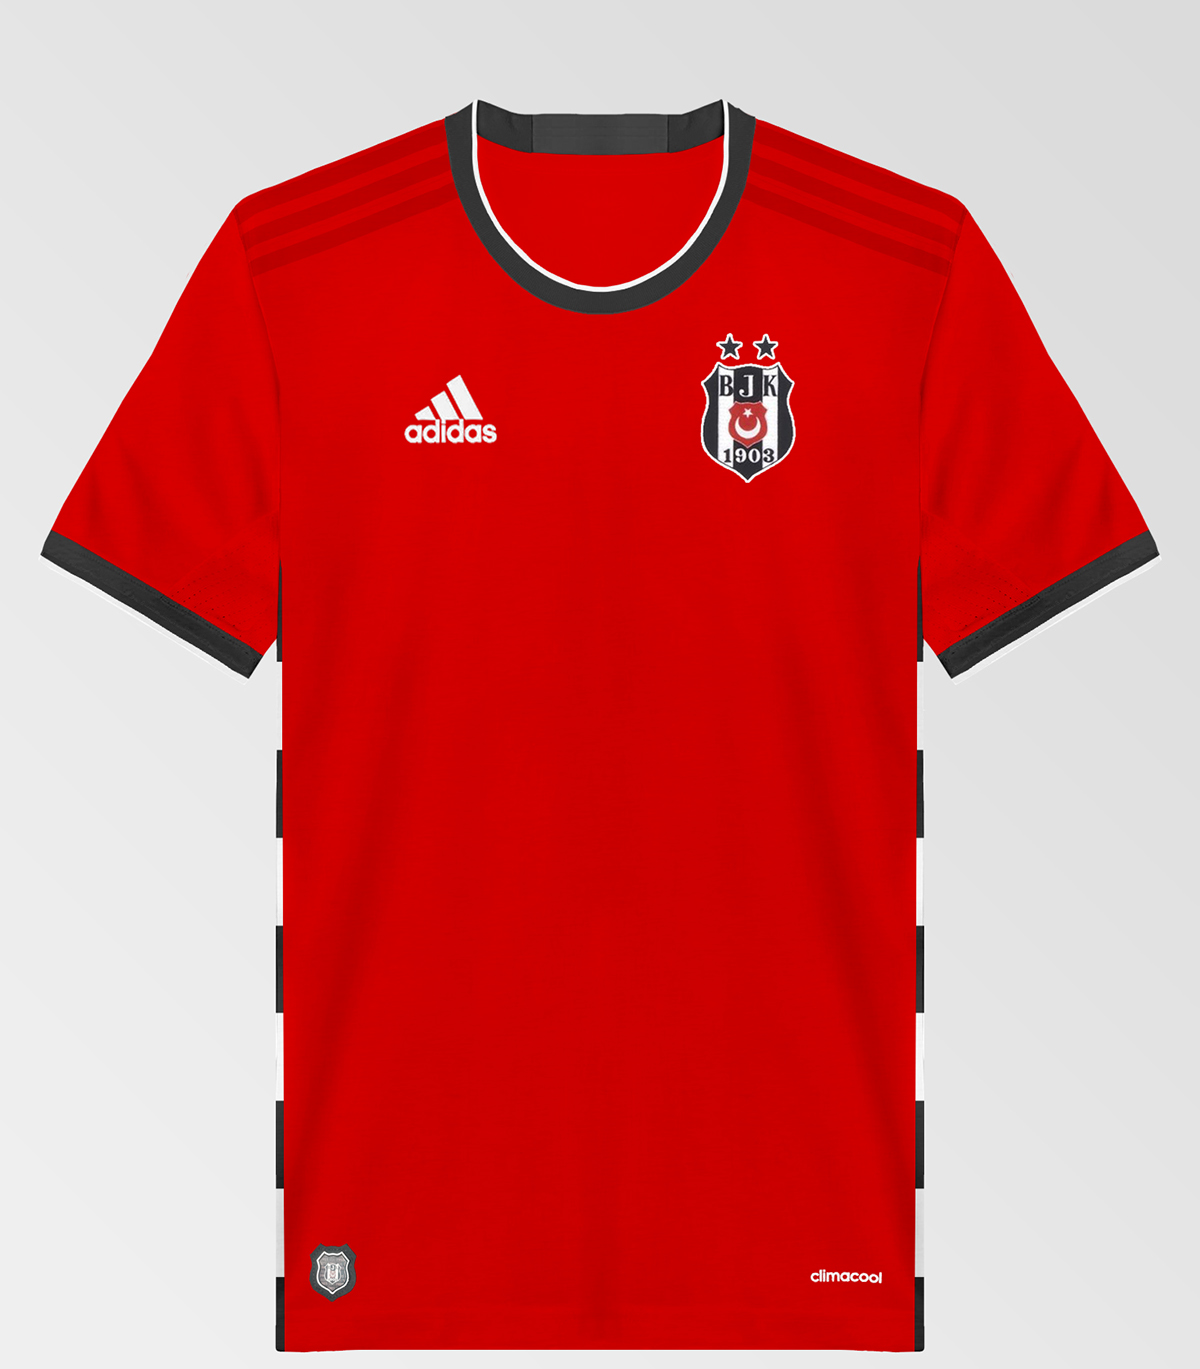 Beşiktaş forma jersey adidas kit black vodafone inonu football soccer